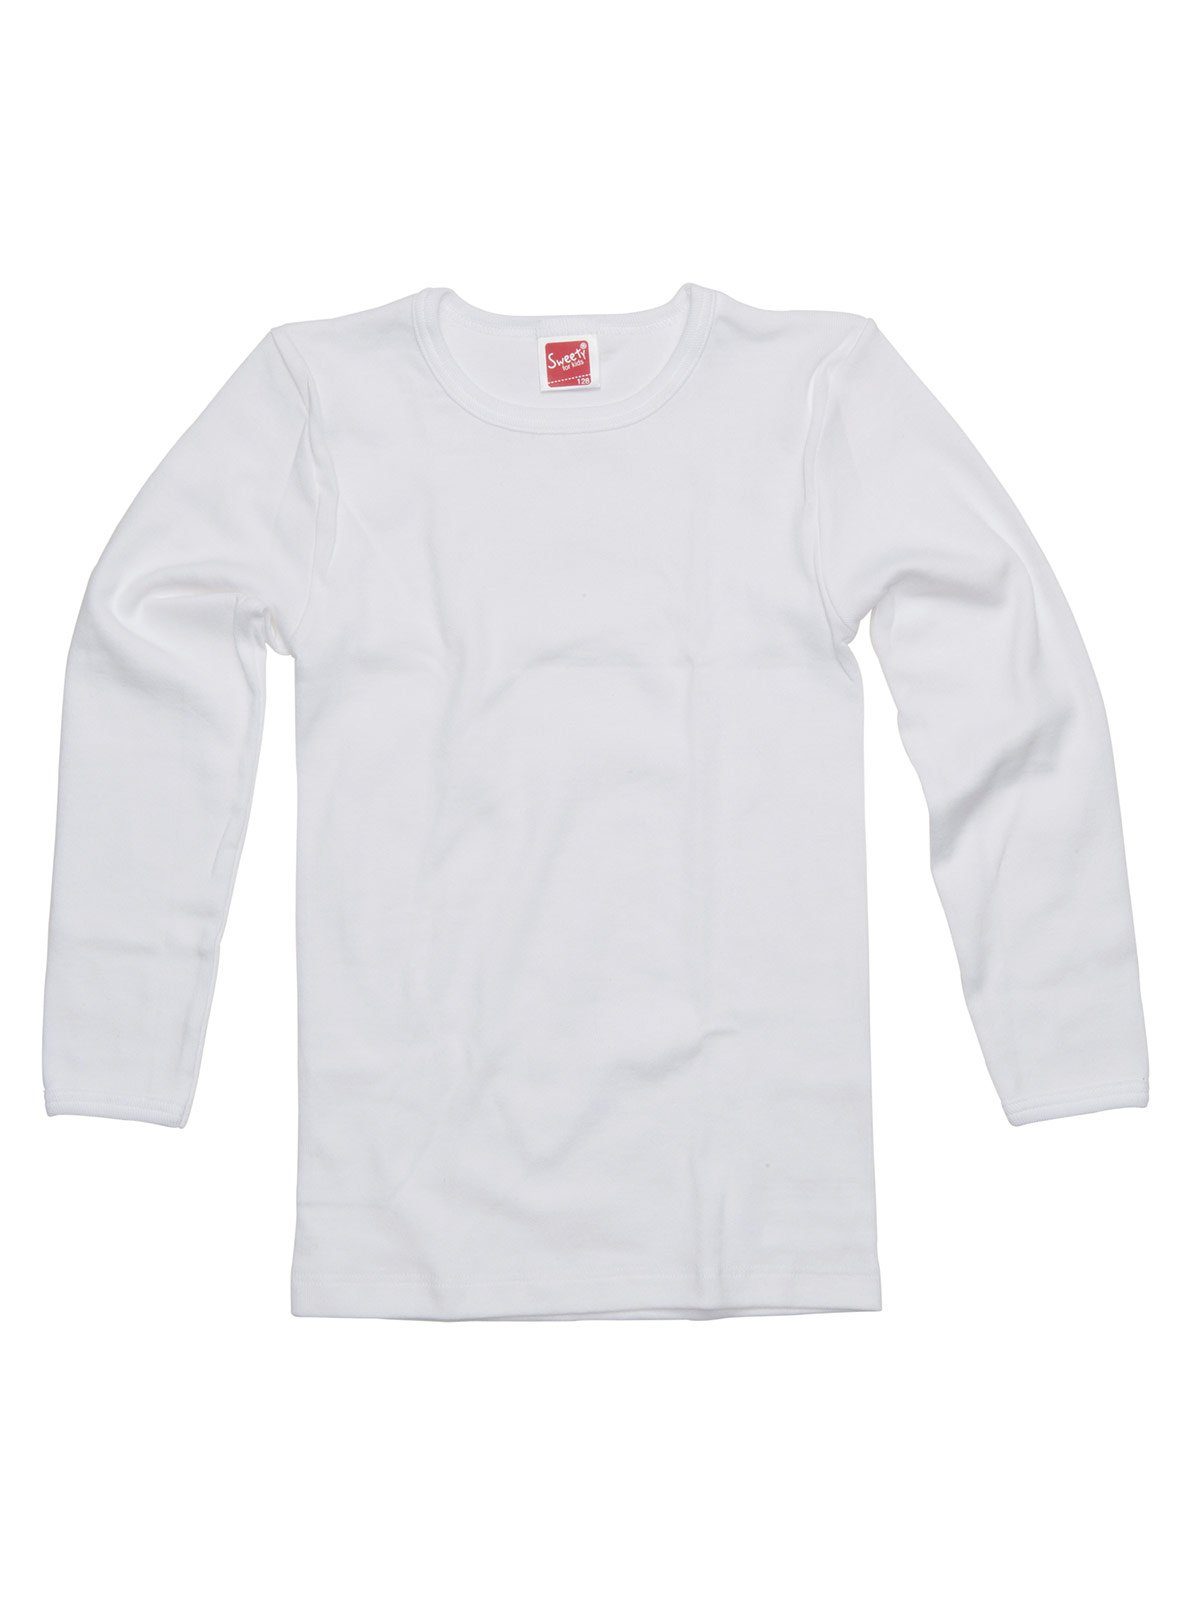 Sweety for Kids Achselhemd Kinder Shirt Winterwäsche (Stück, 1-St) hohe Markenqualität weiss